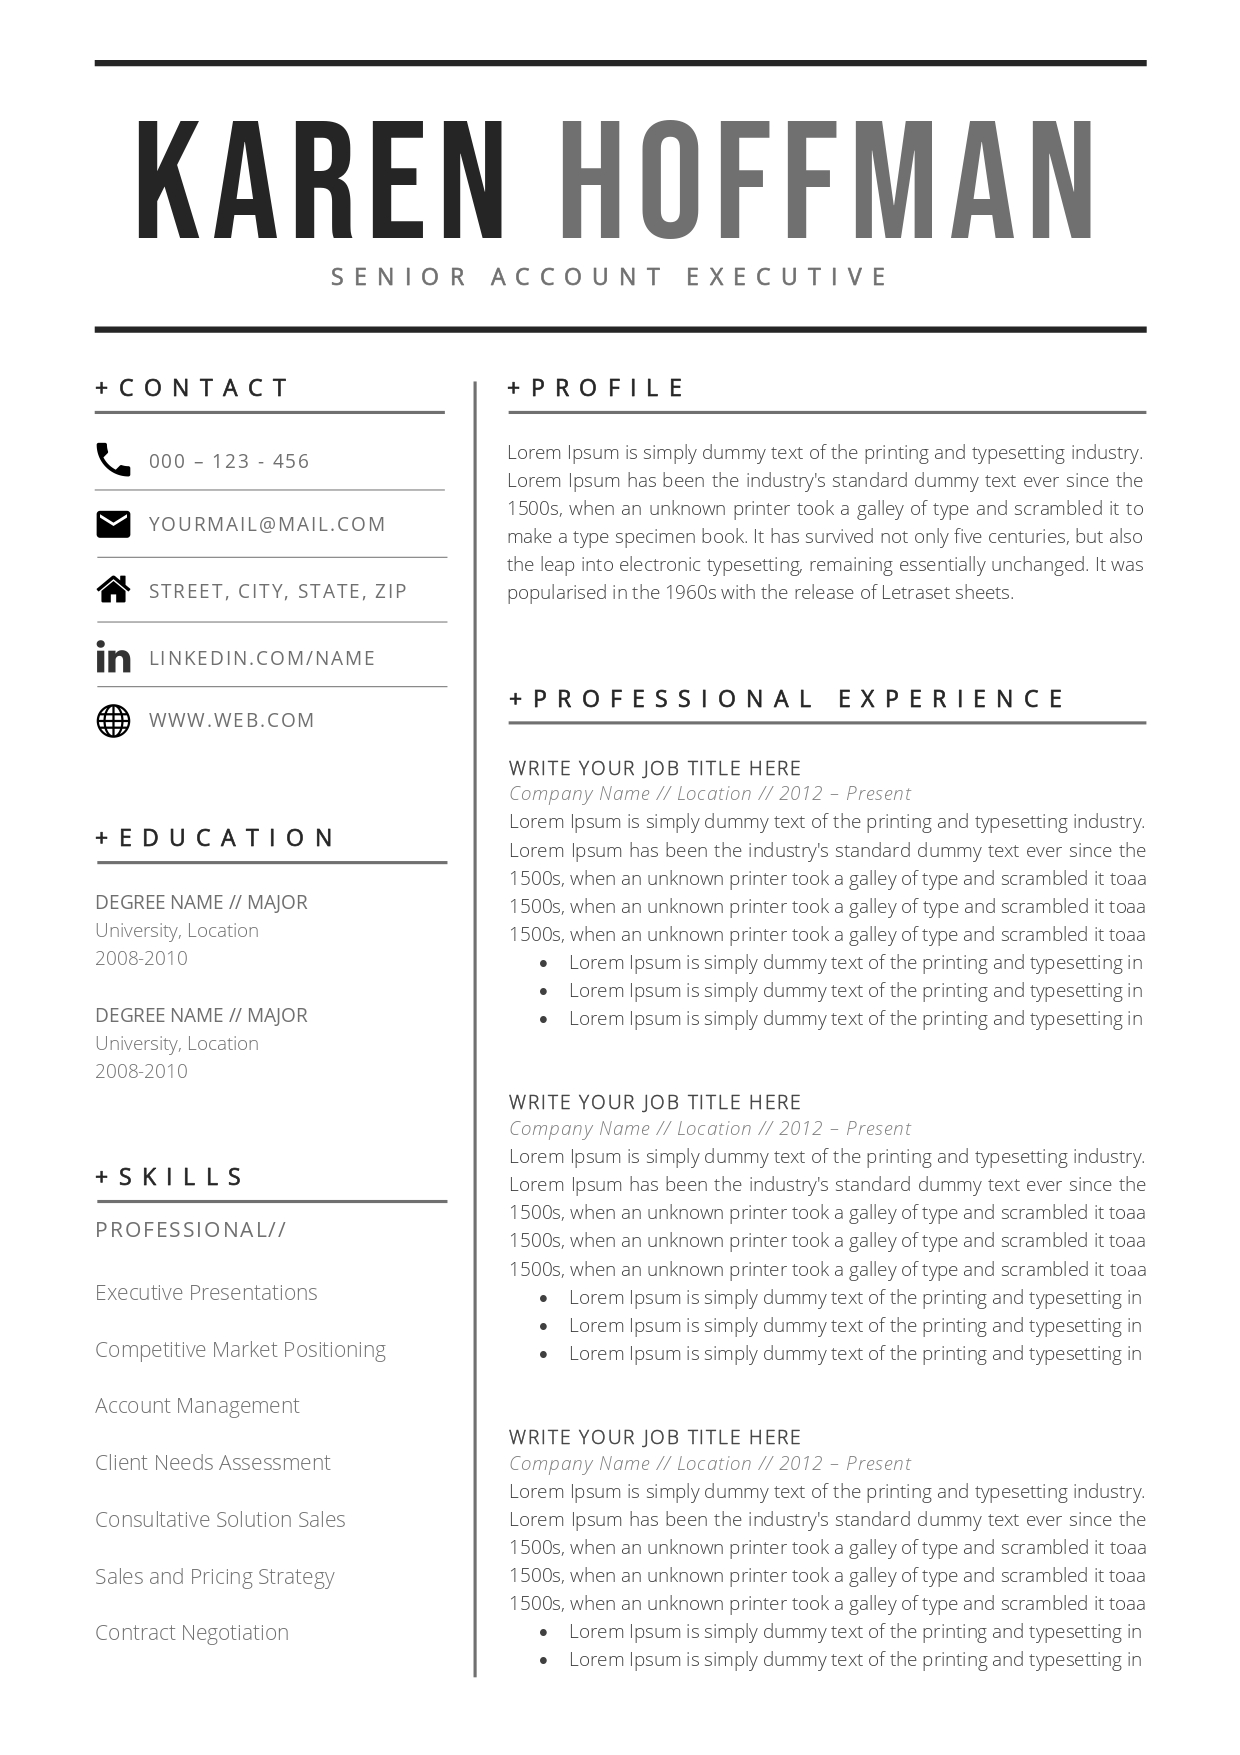 Resume/CV Template